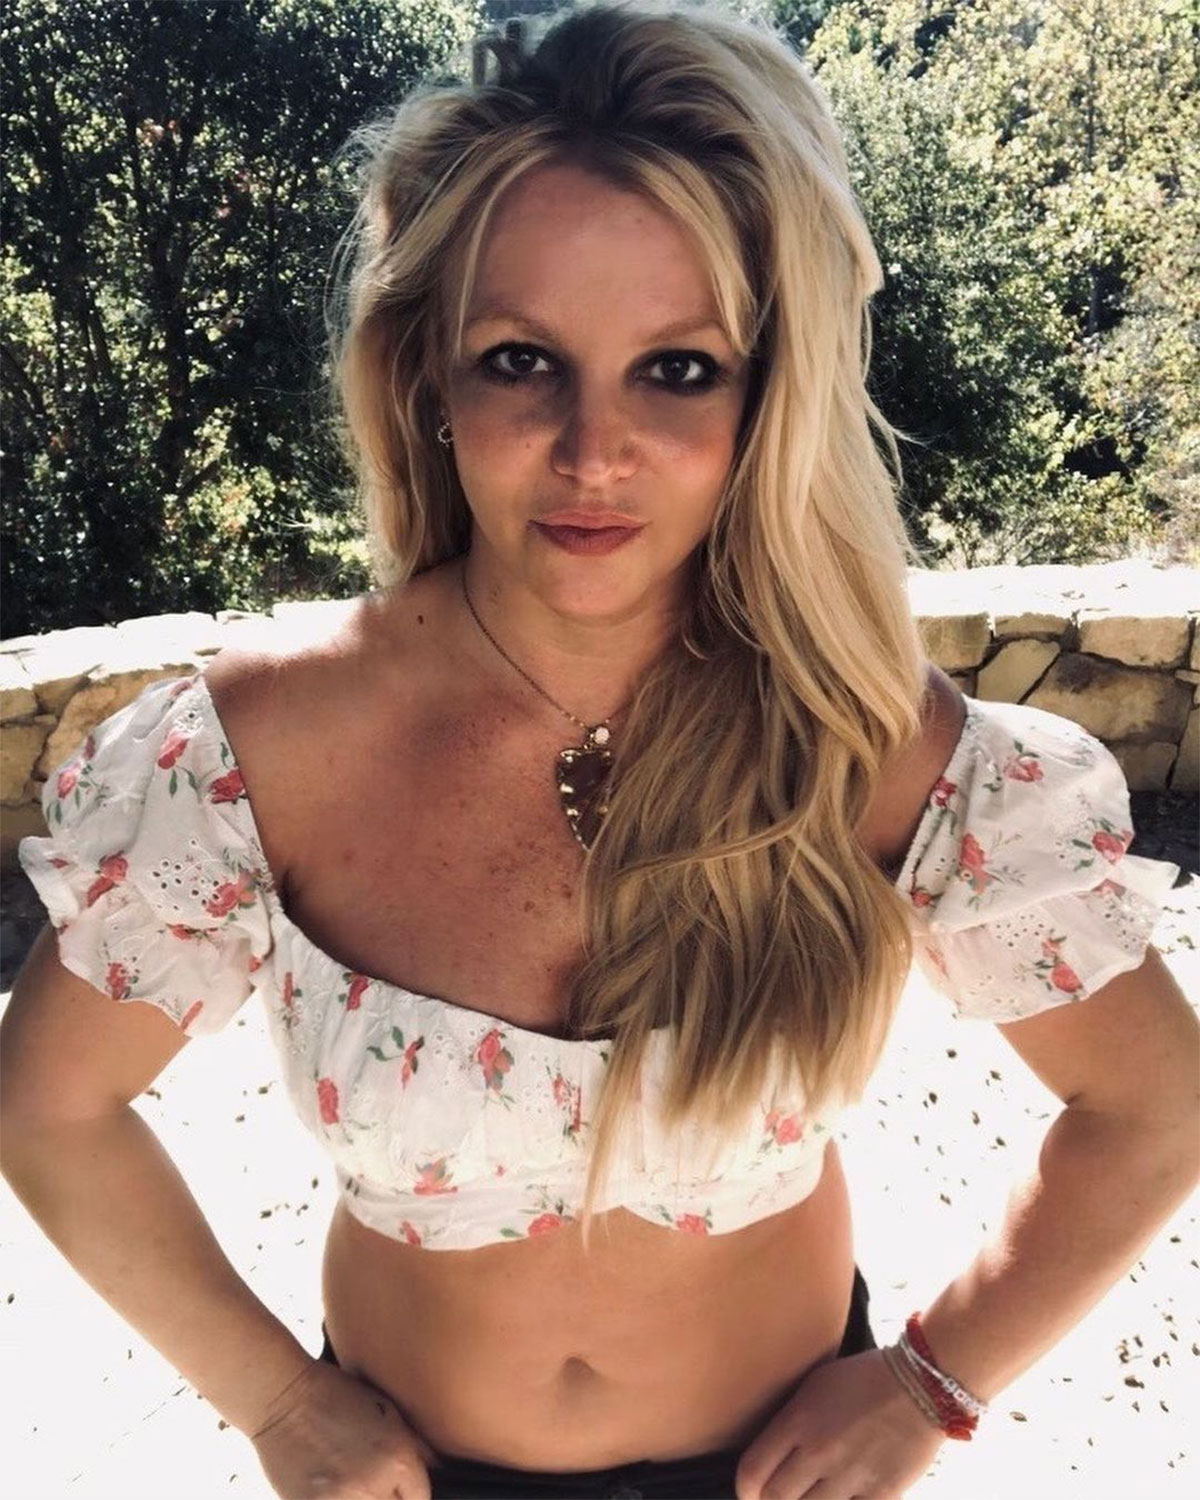 Britney Spears Porn Captions - Britney Spears' Mental Health, Conservatorship Battle Explained